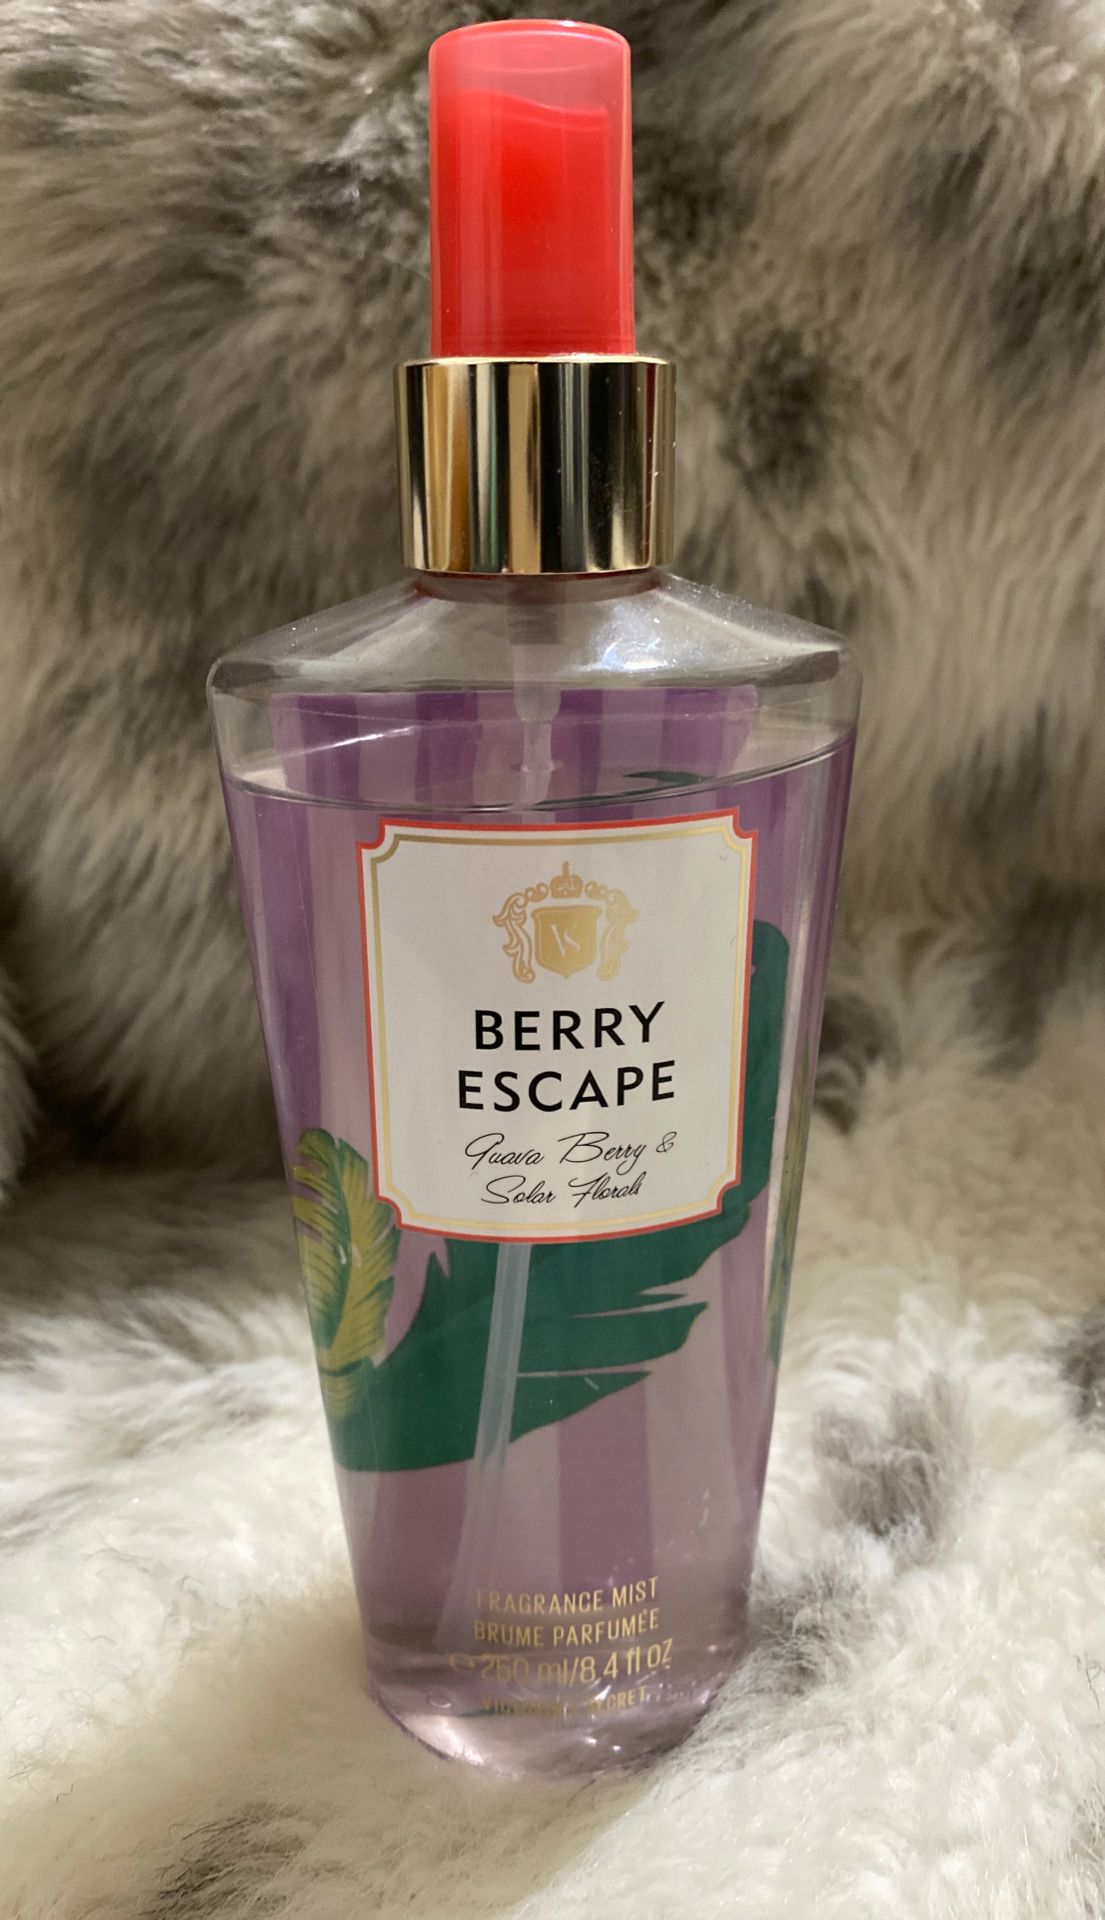 Victoria’s Secret Berry Escape Guava Berry and Solar Florals Fragrance Mist